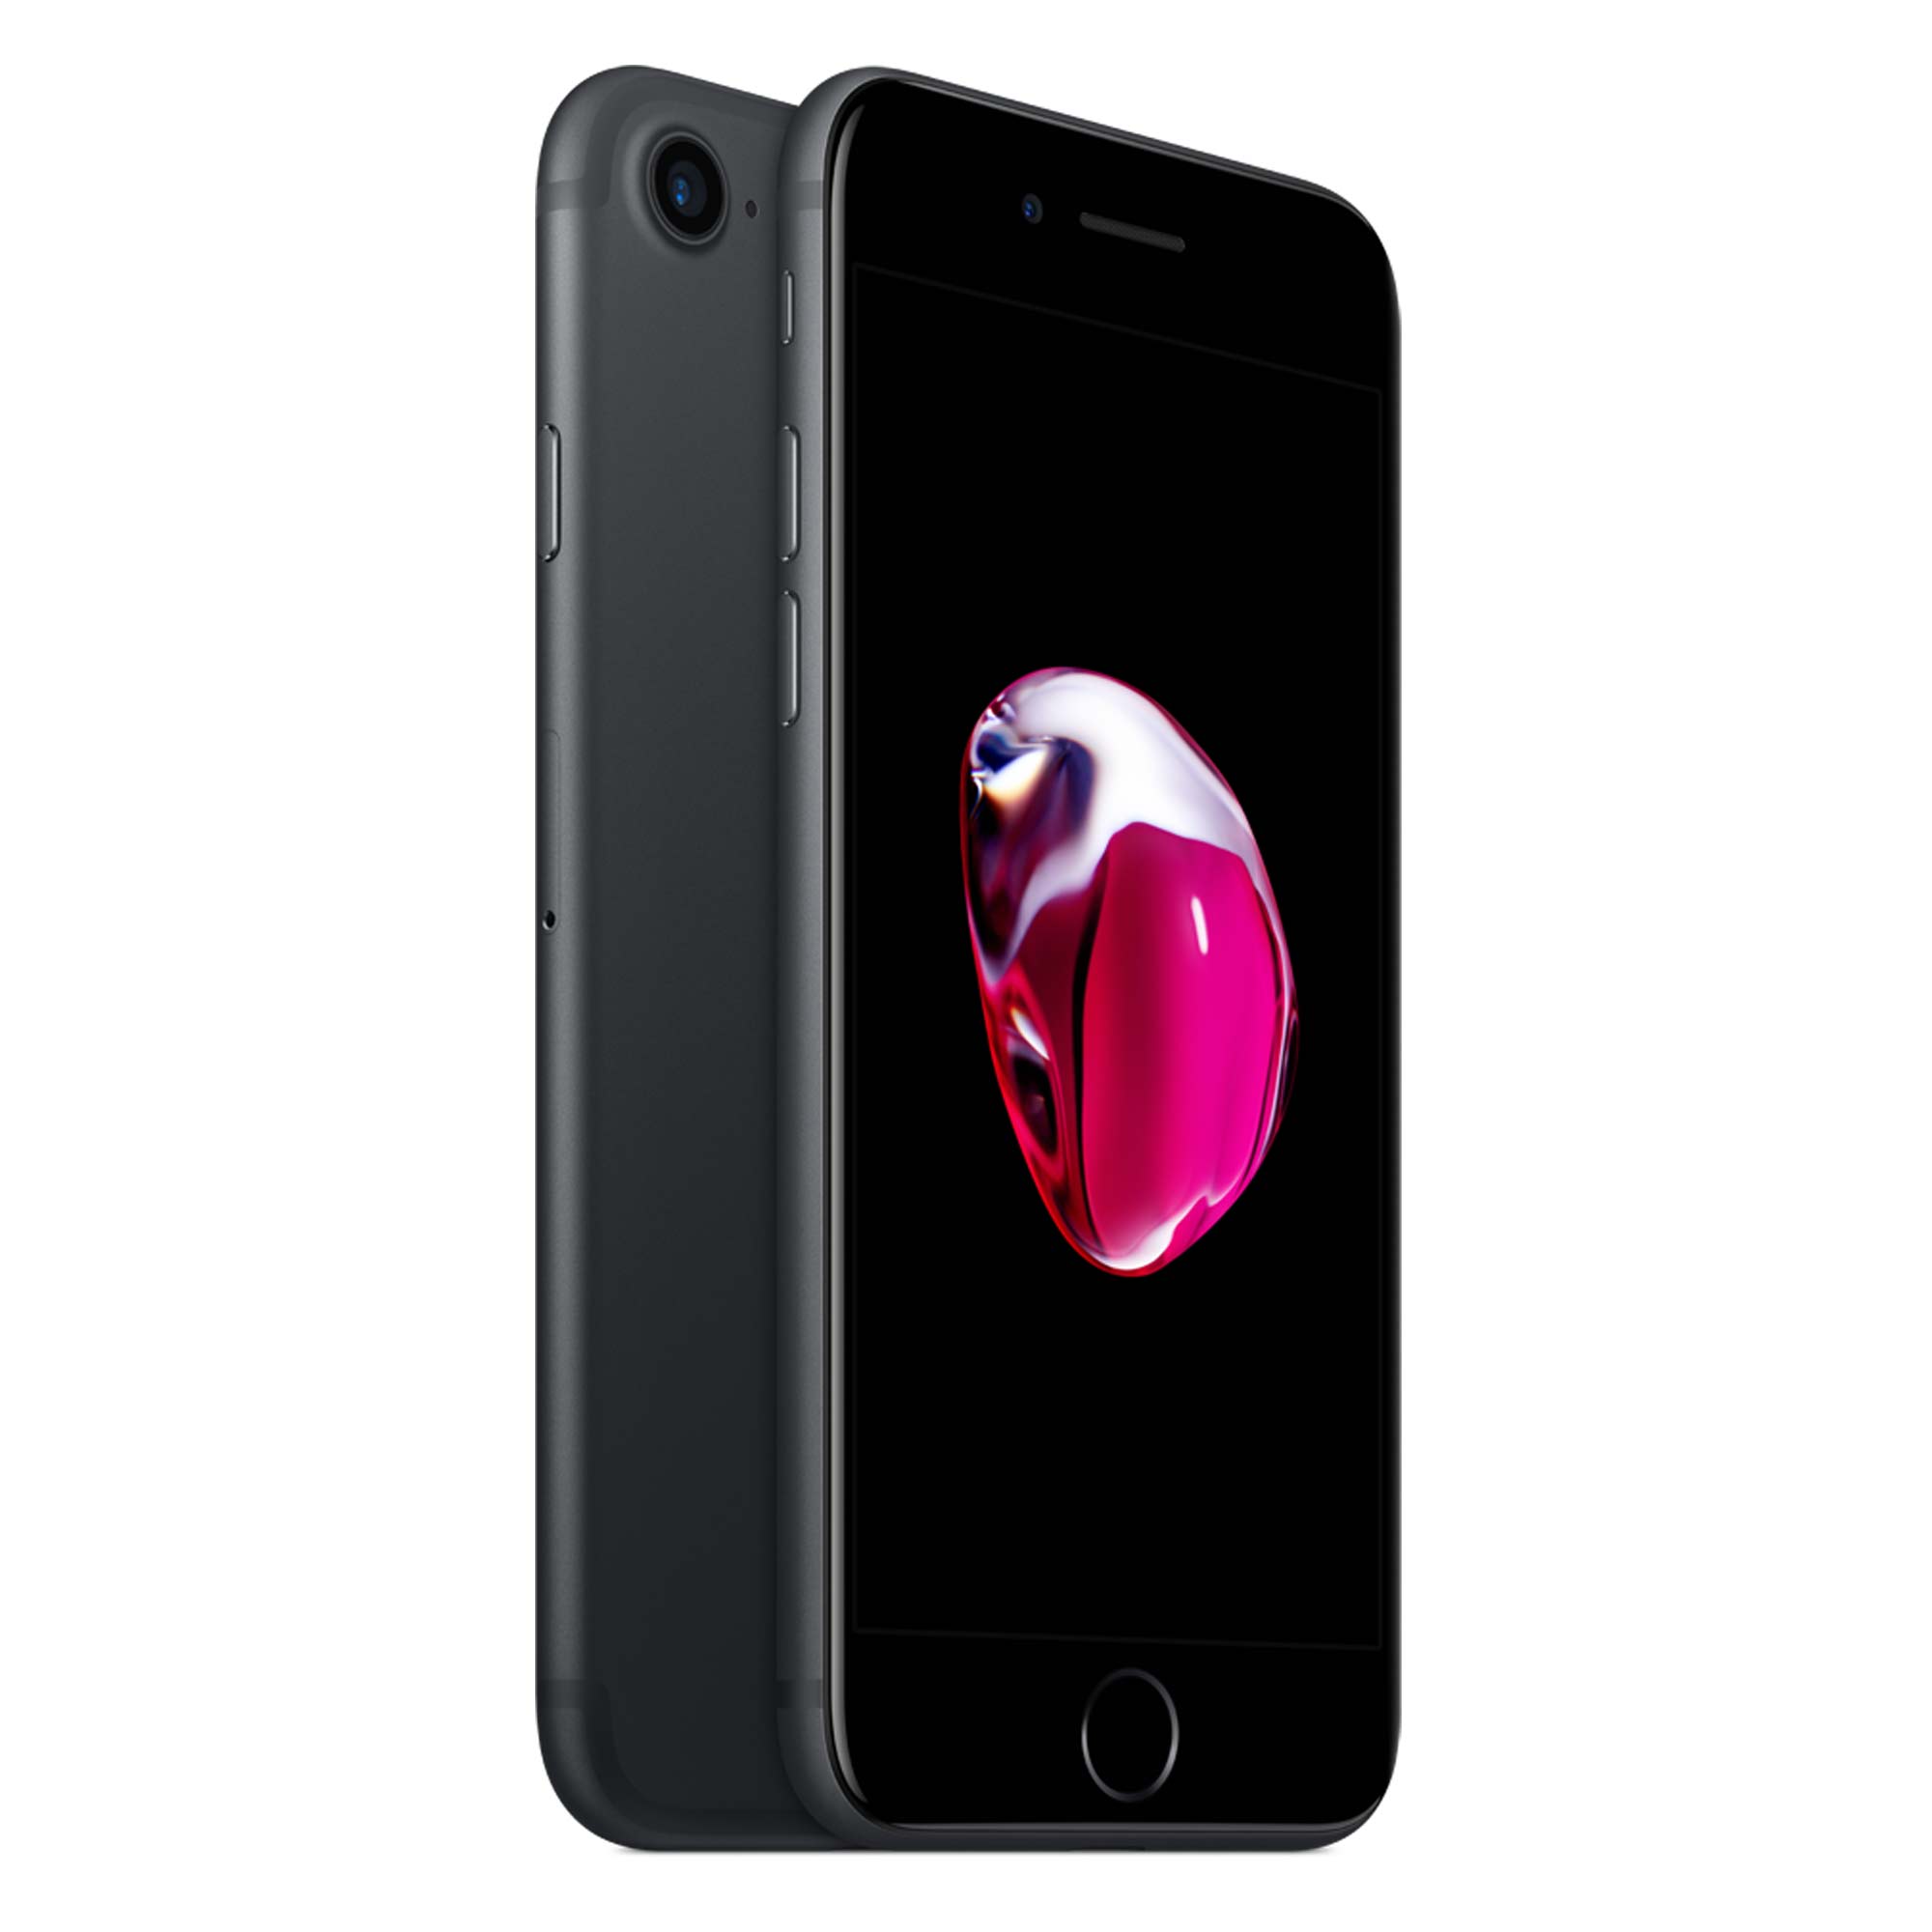 Apple iPhone 7 32GB GSM Unlocked - Black (Used) +Liquid Nano Screen Protector - image 1 of 5